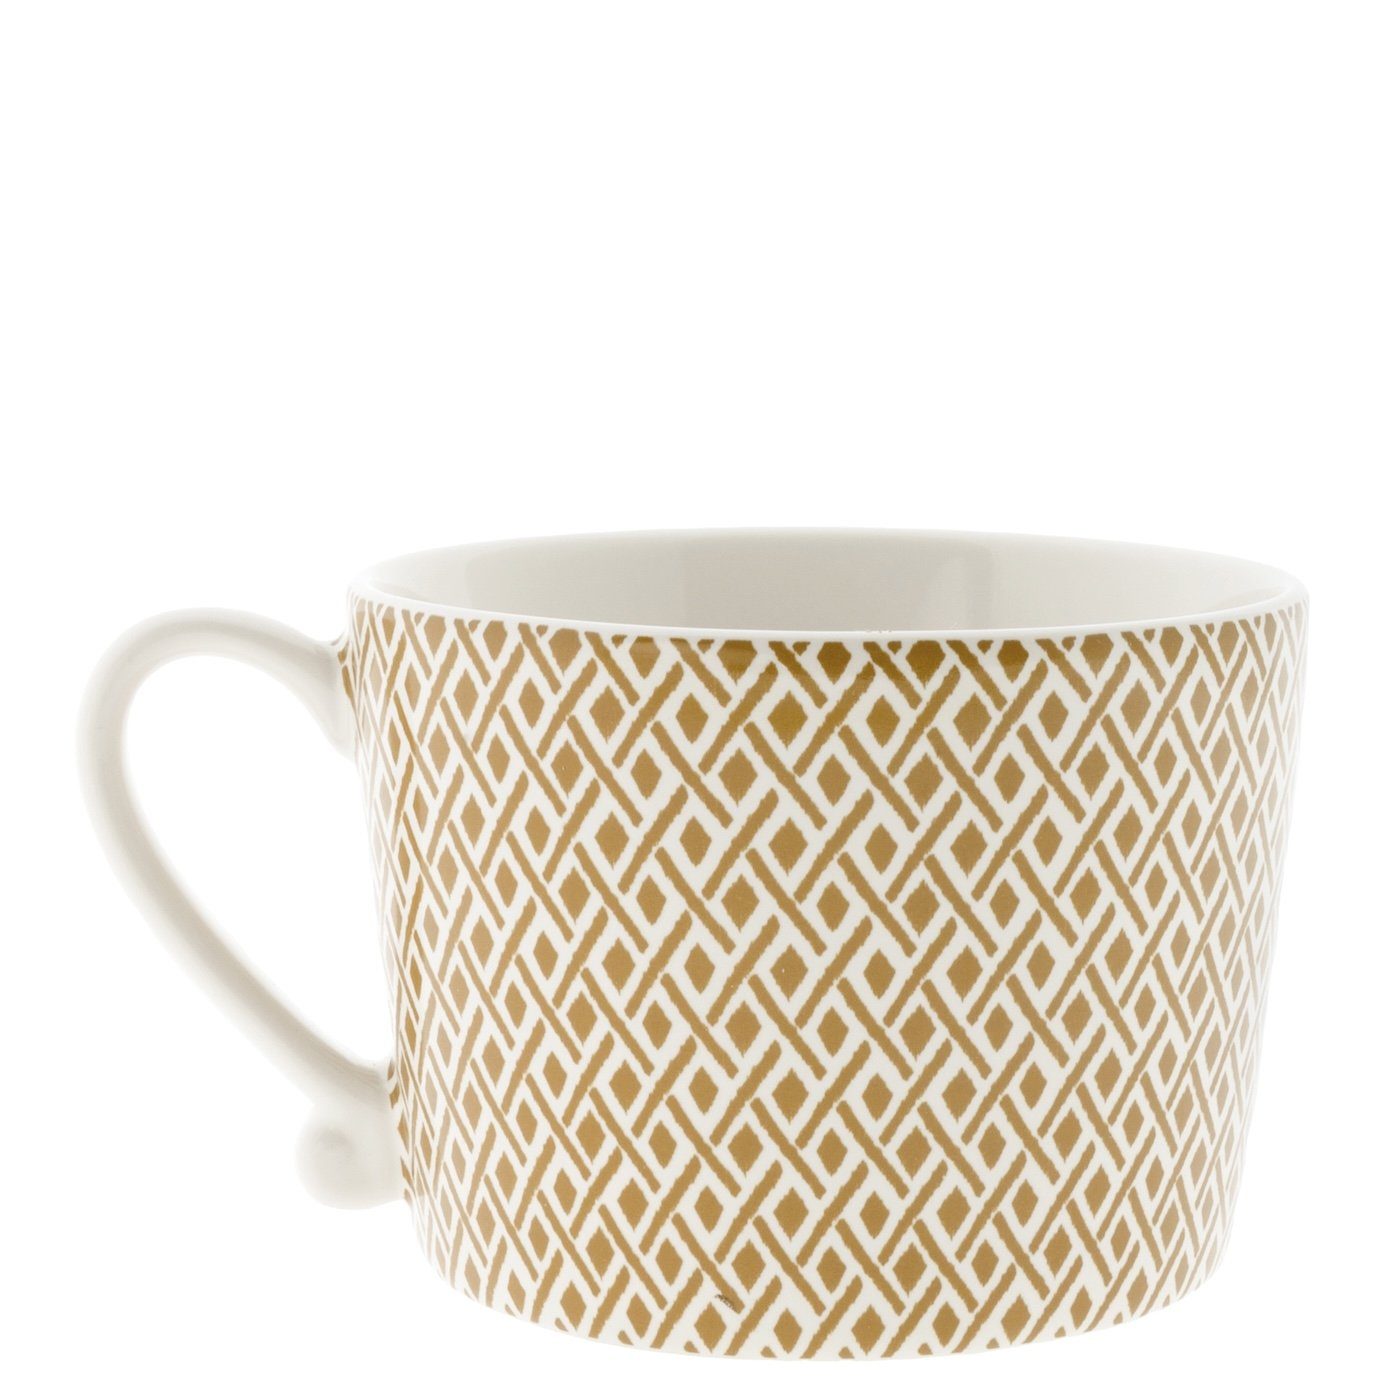 Tasse Bastion handbemalt Keramik mit Henkel weiß karamell, Keramik, Little Collections Tasse Check